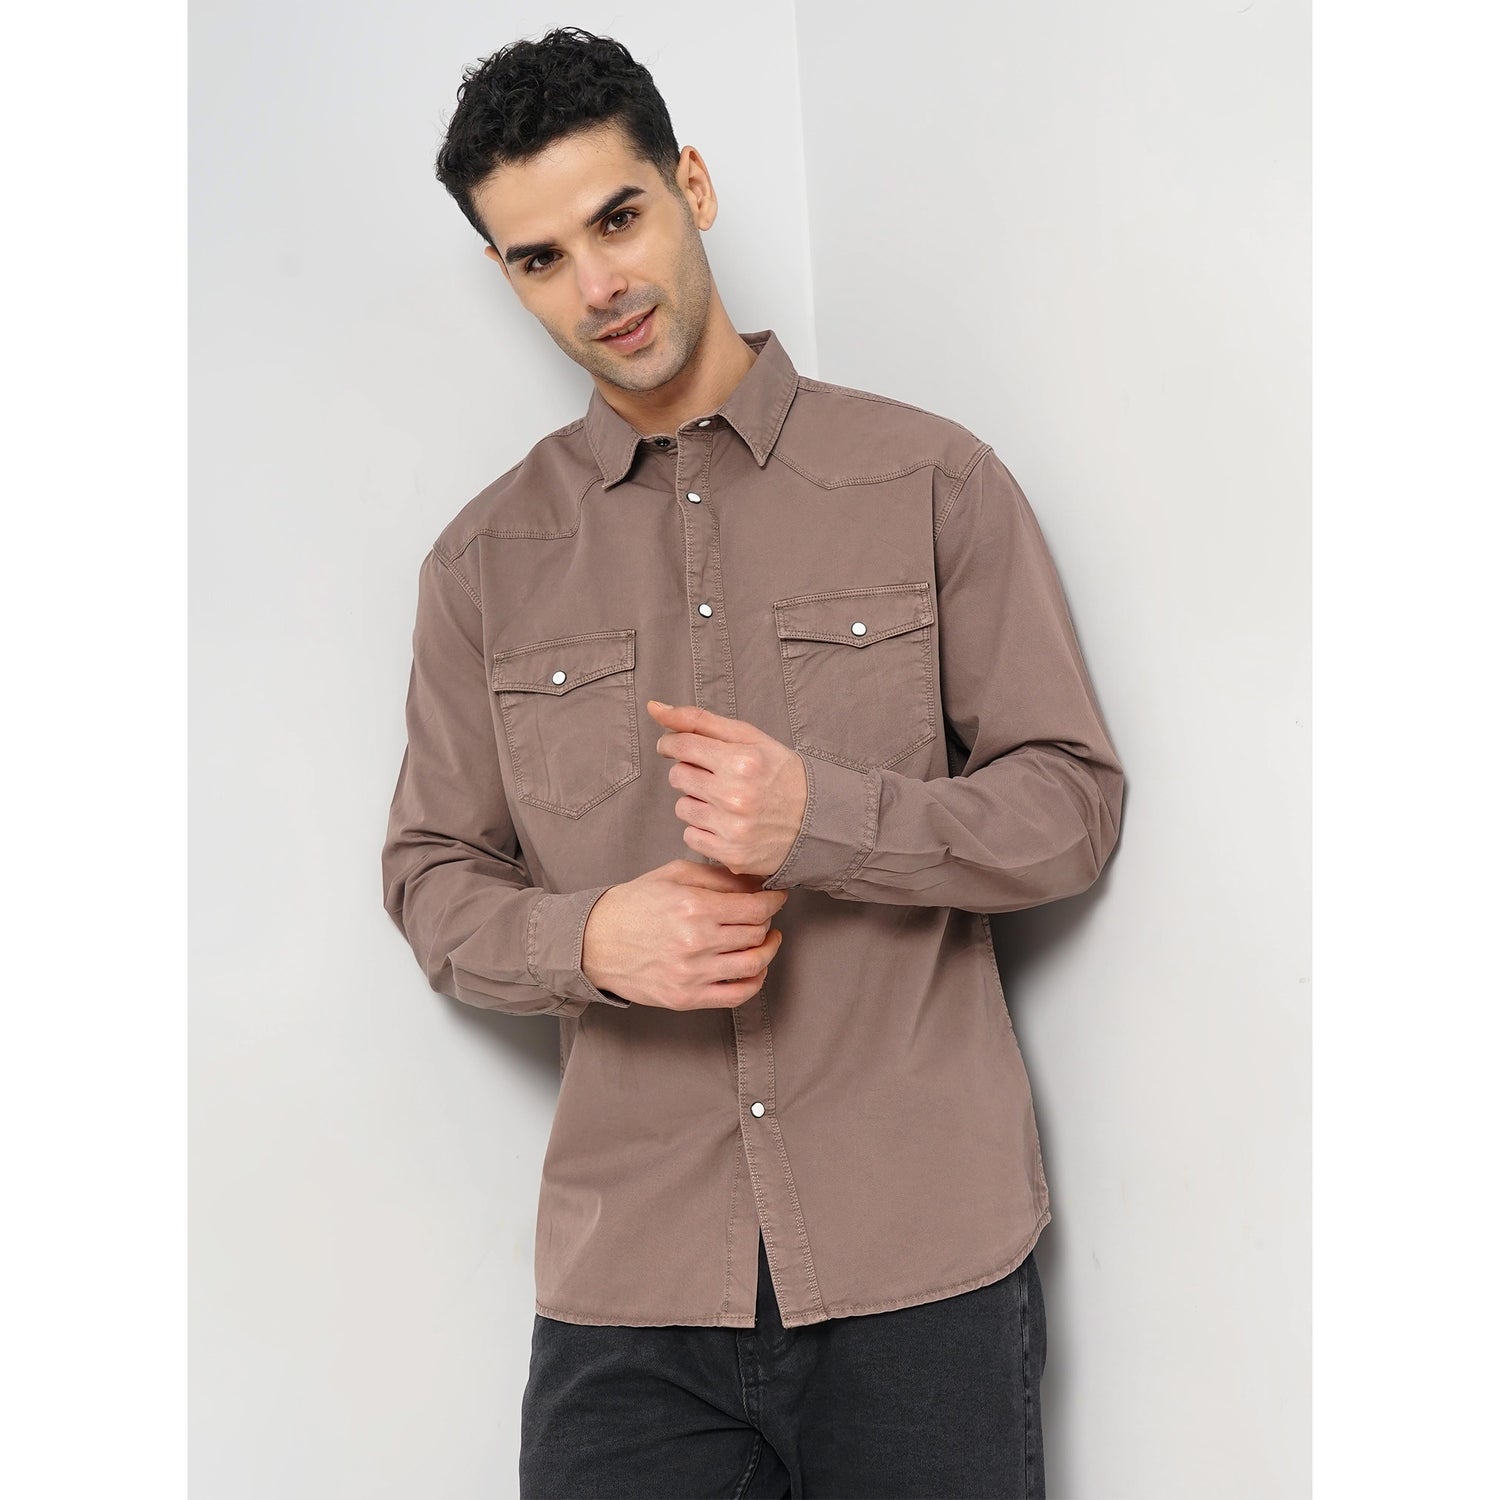 Men's Brown Solid Regular Fit Cotton Overdyed Twill Denim Casual Shirt (FAWESTOD)